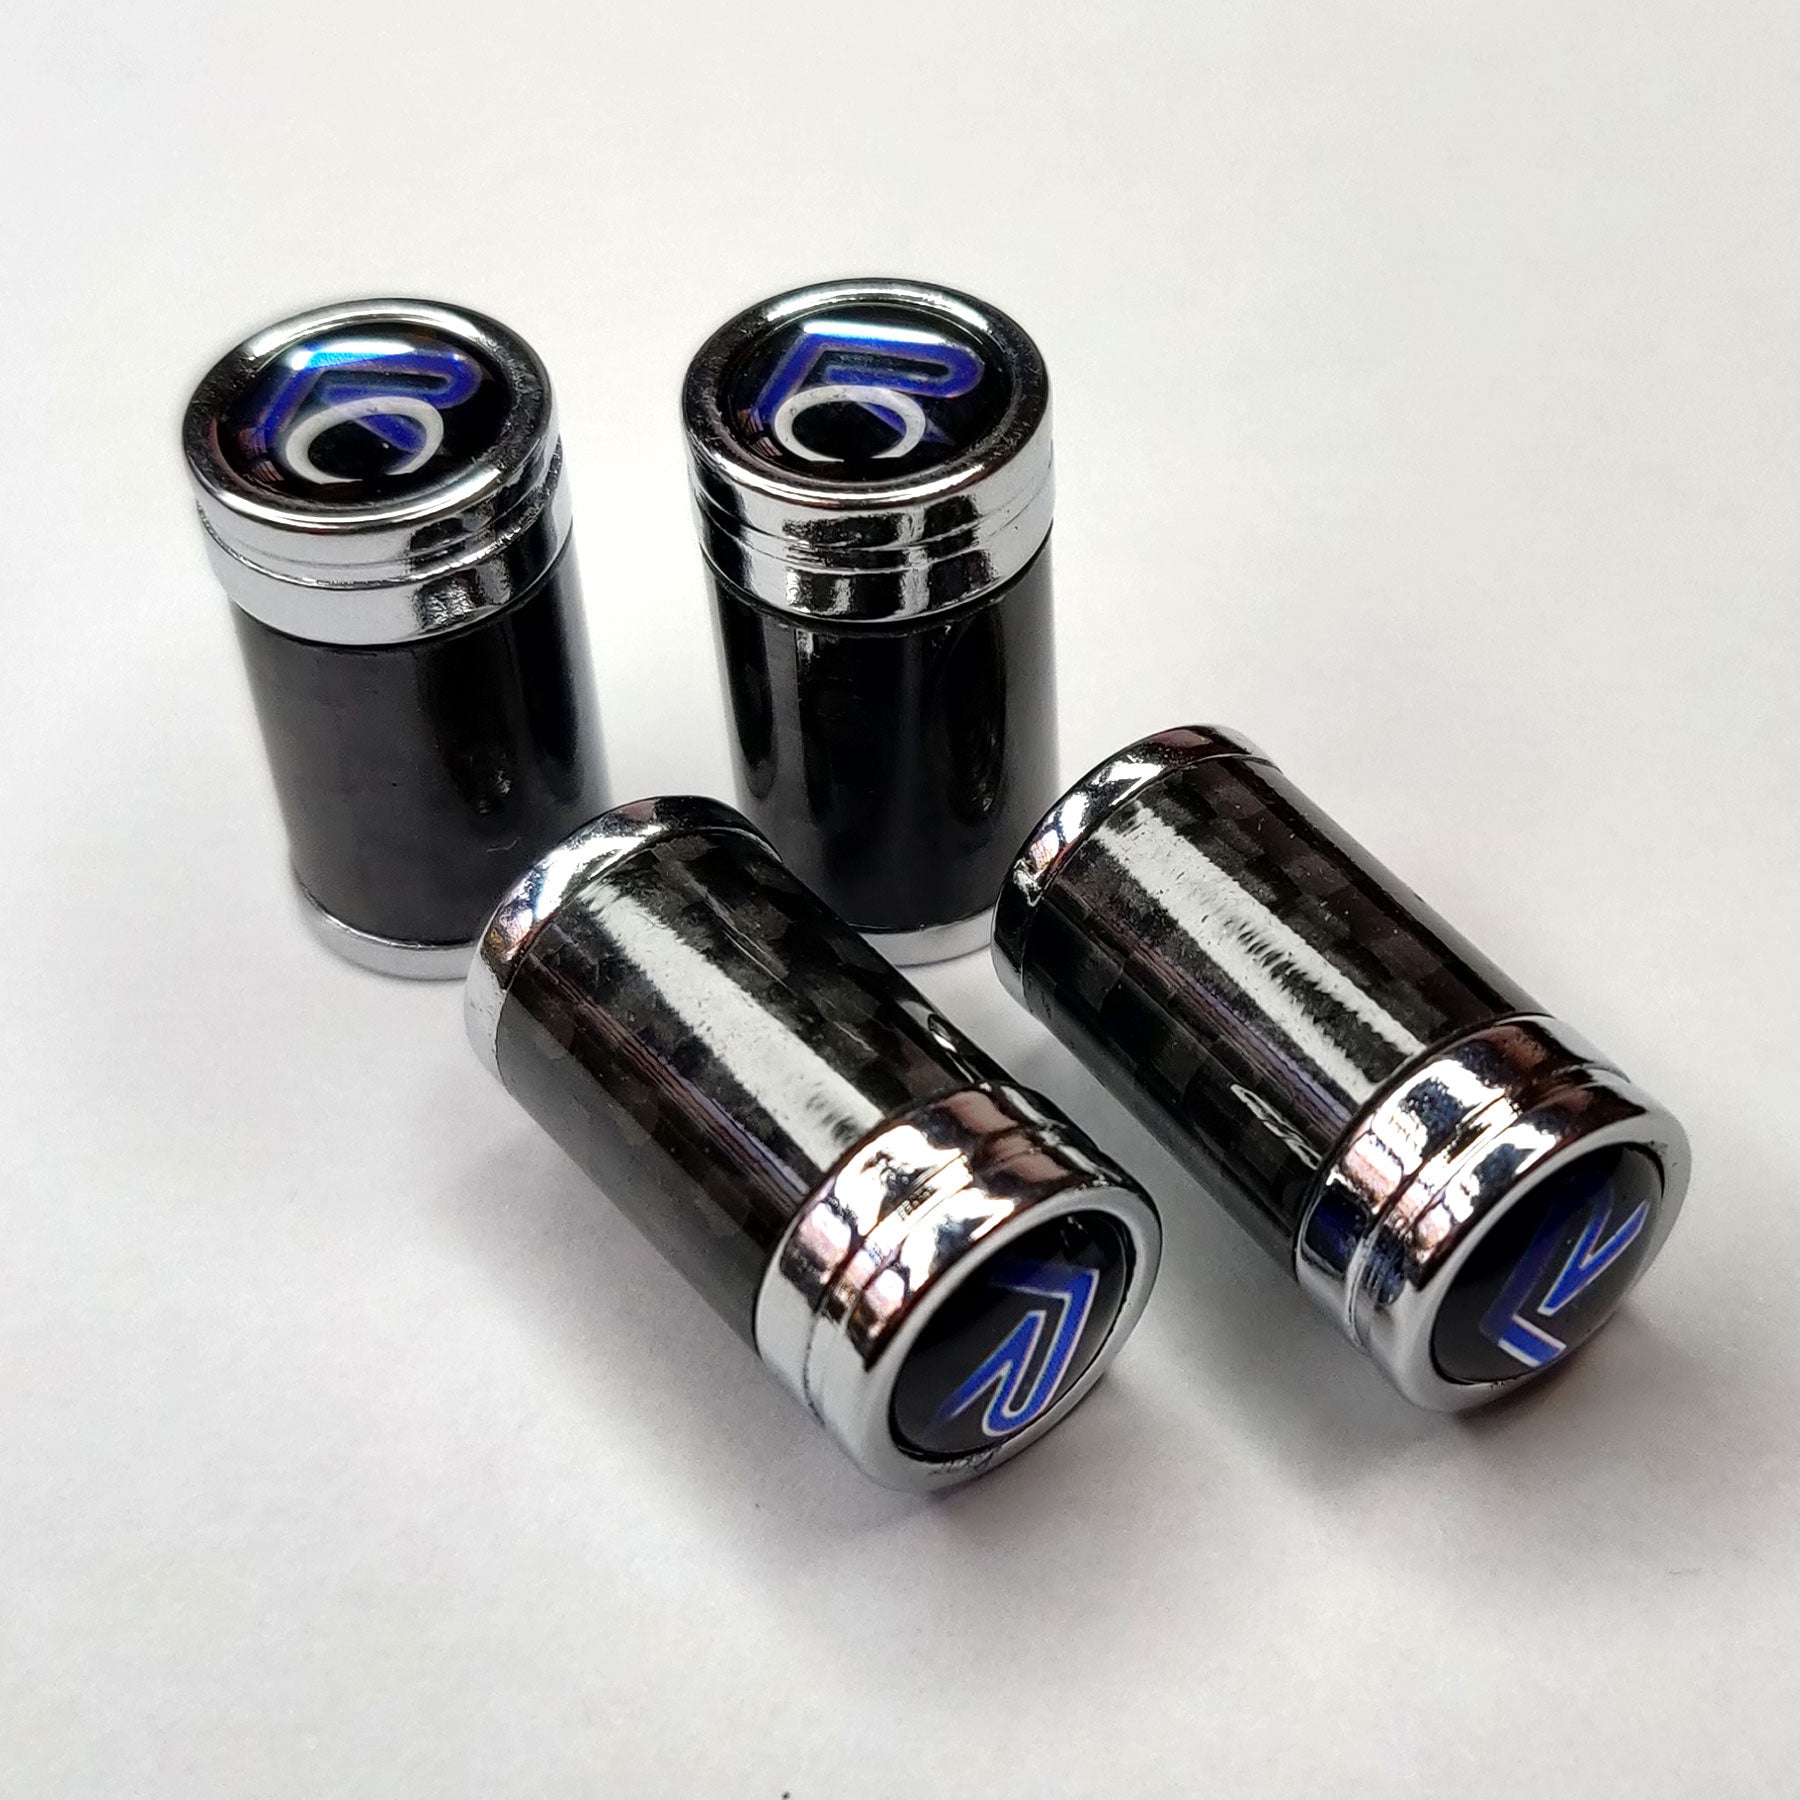 Real Carbon Fiber & Aluminum Valve Stem Caps, Black or Silver